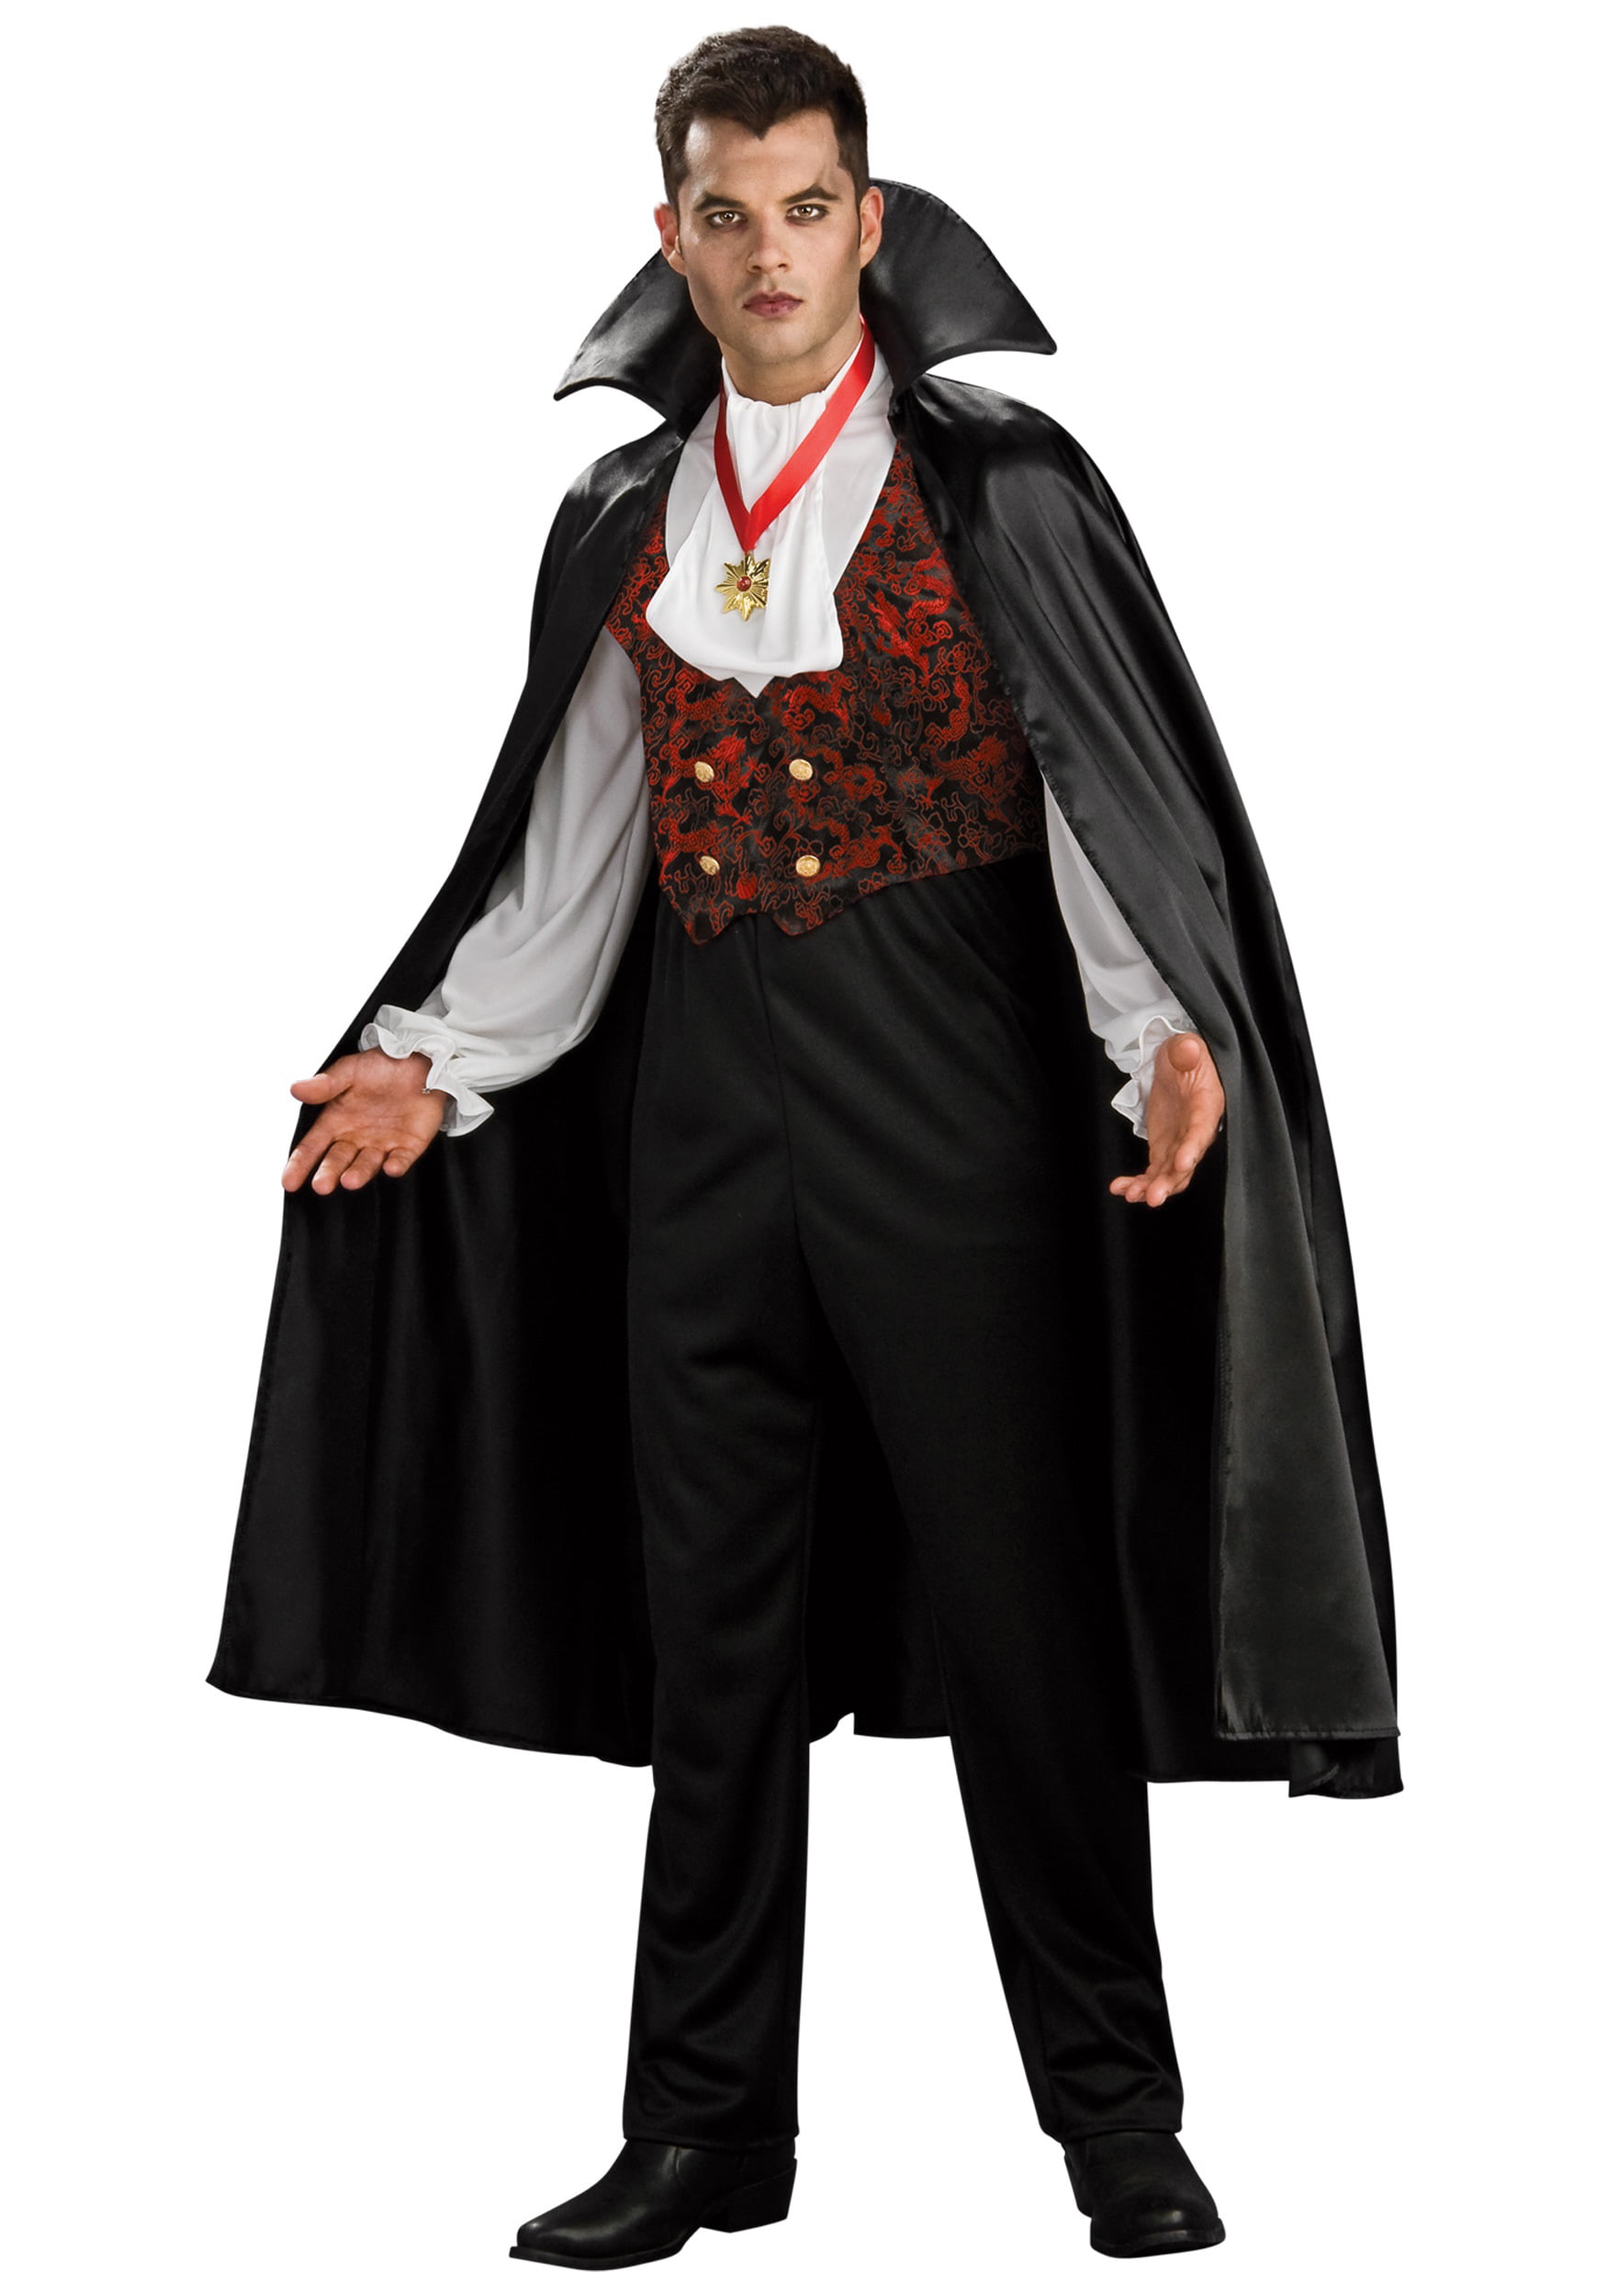 Child Large Forum Novelties Transylvanian Vampire Costume